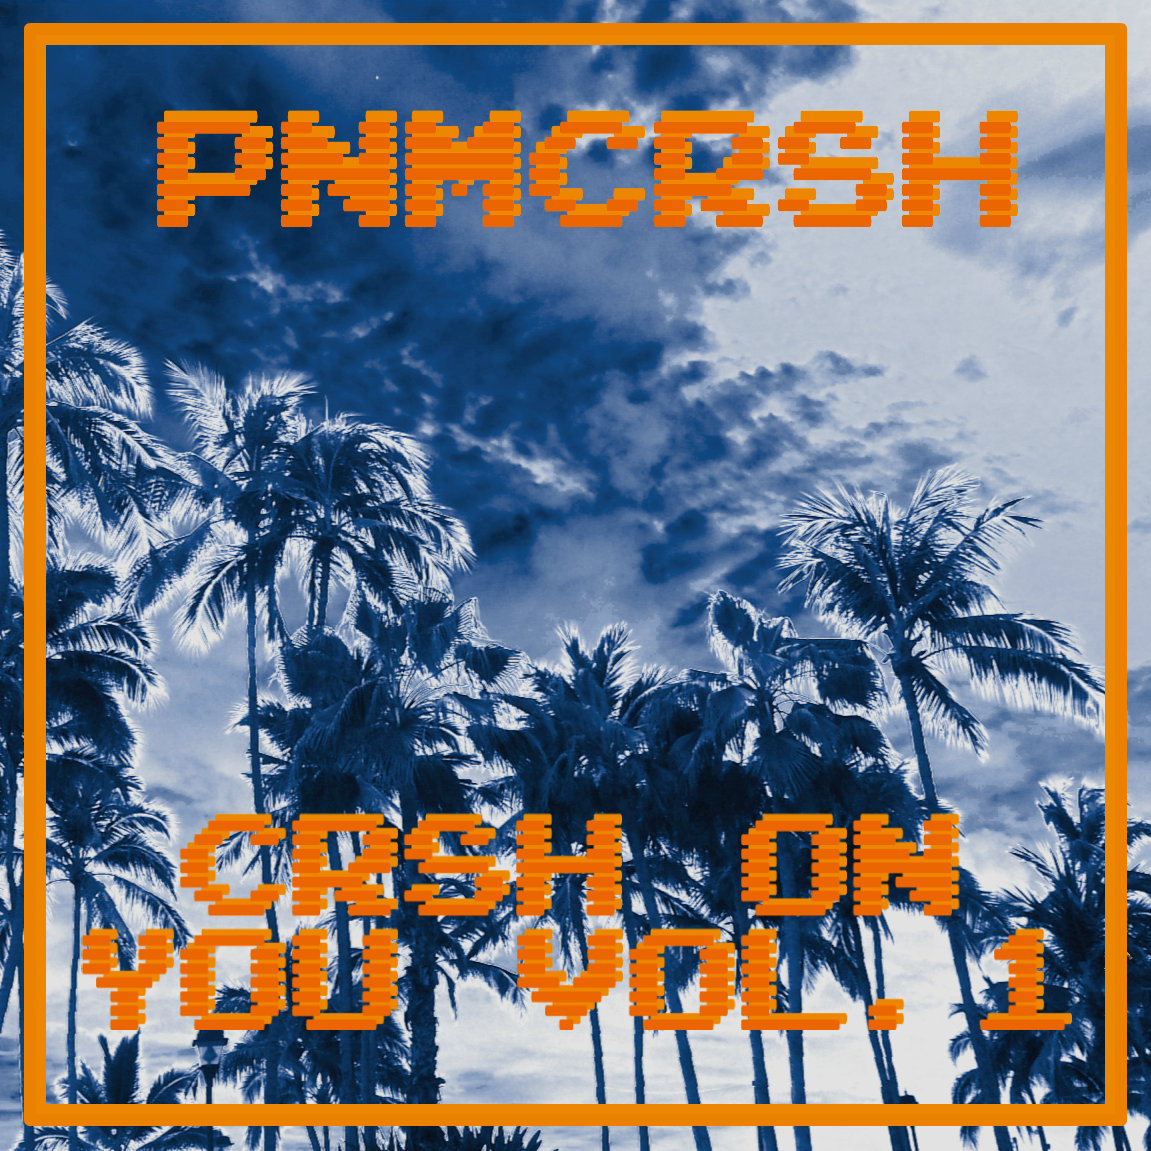 I Got U (PNMCRSH RMX) | Duke Dumont Feat. Jax Jones | Σшρτγ